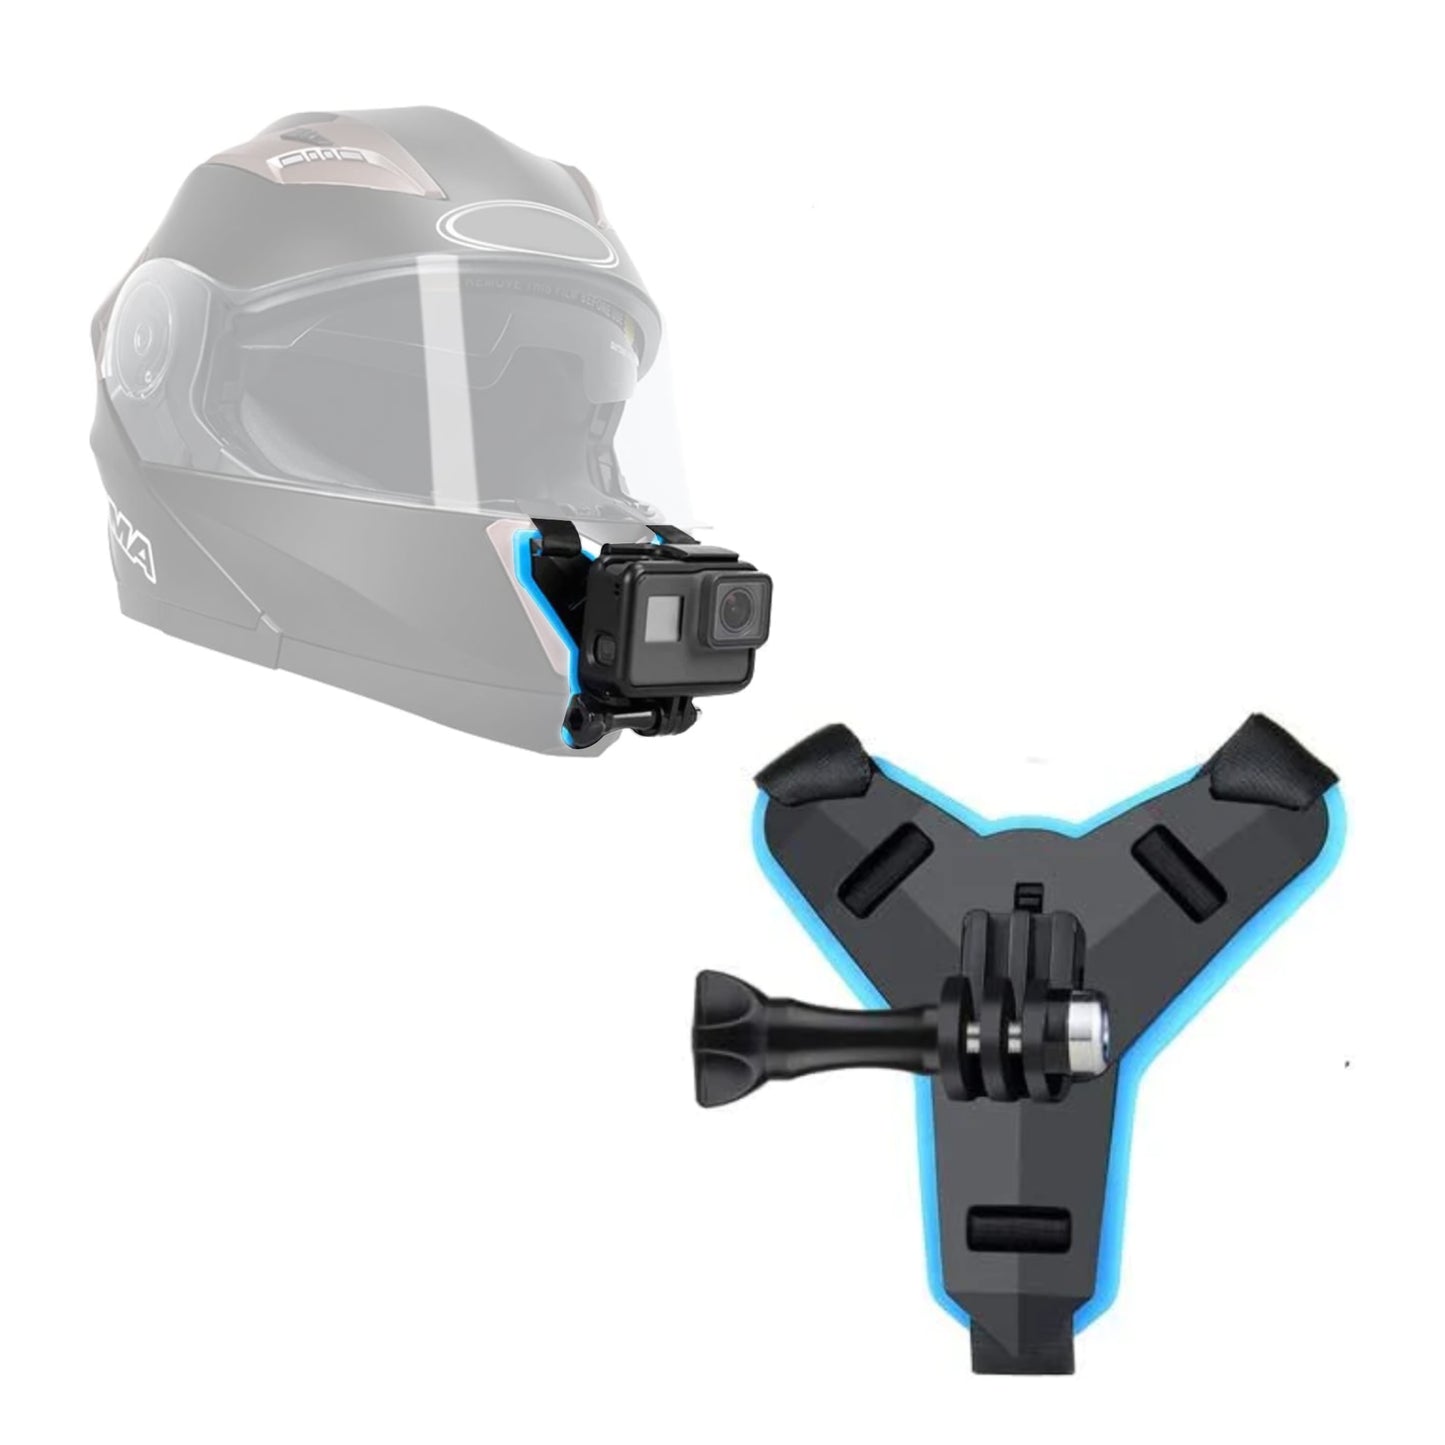 EYUVAA Helmet Strap Mount Front Chin Mount for GoPro Hero Session, SJCAM, AKASO, Campark Action Camera Helmet Mount Curved